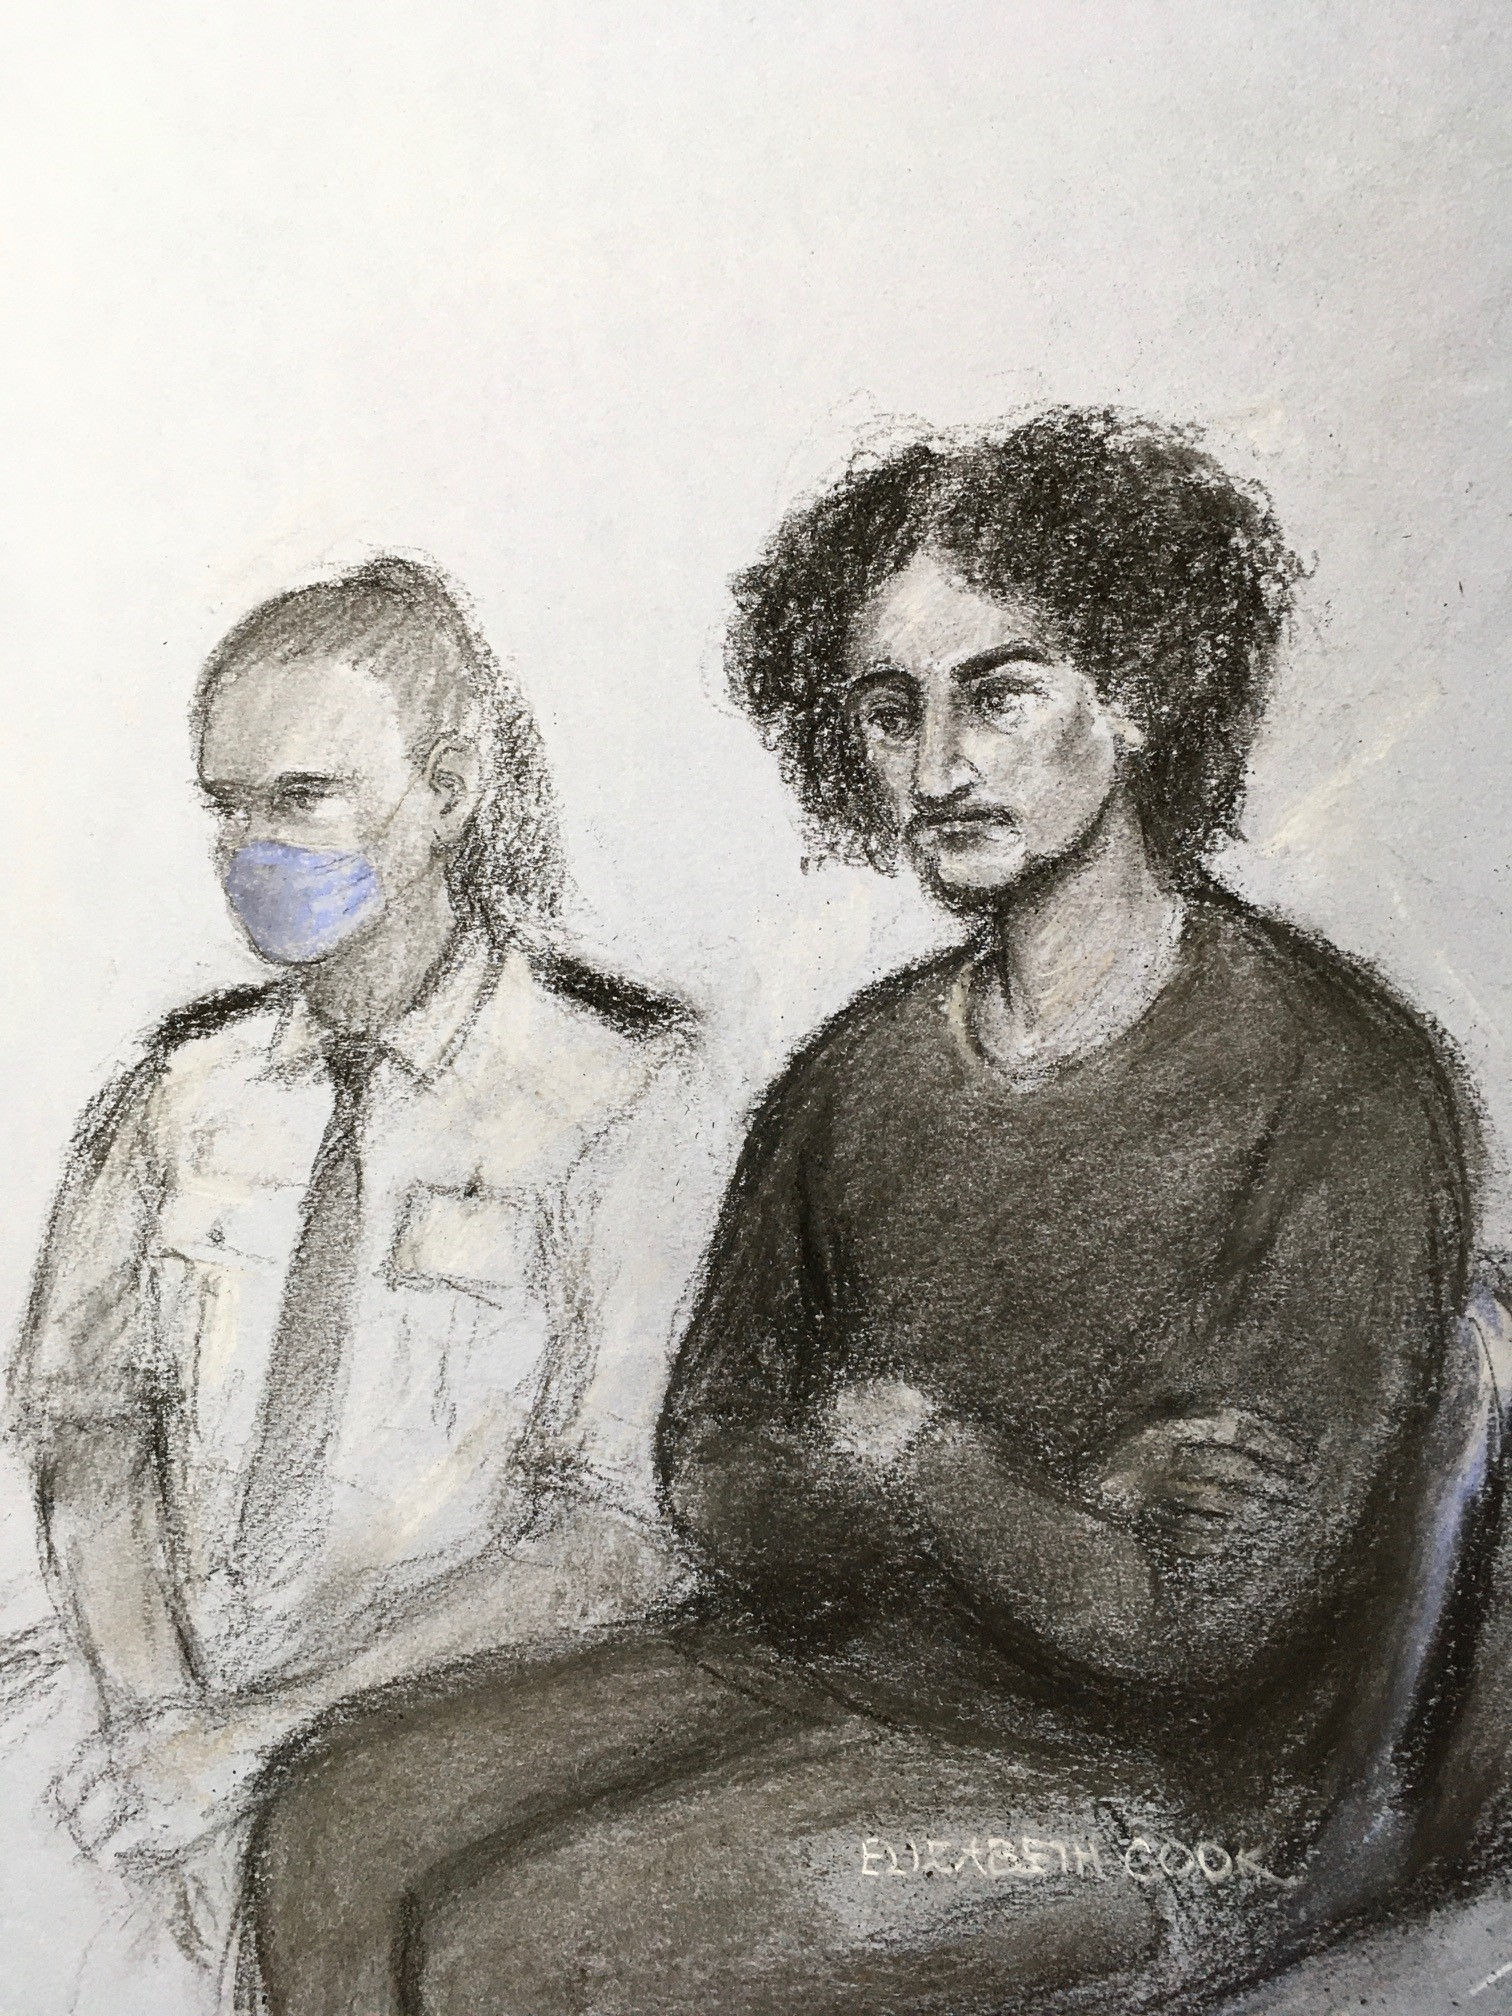 PA - The court trial of Blackheath teen Danyal Hussein